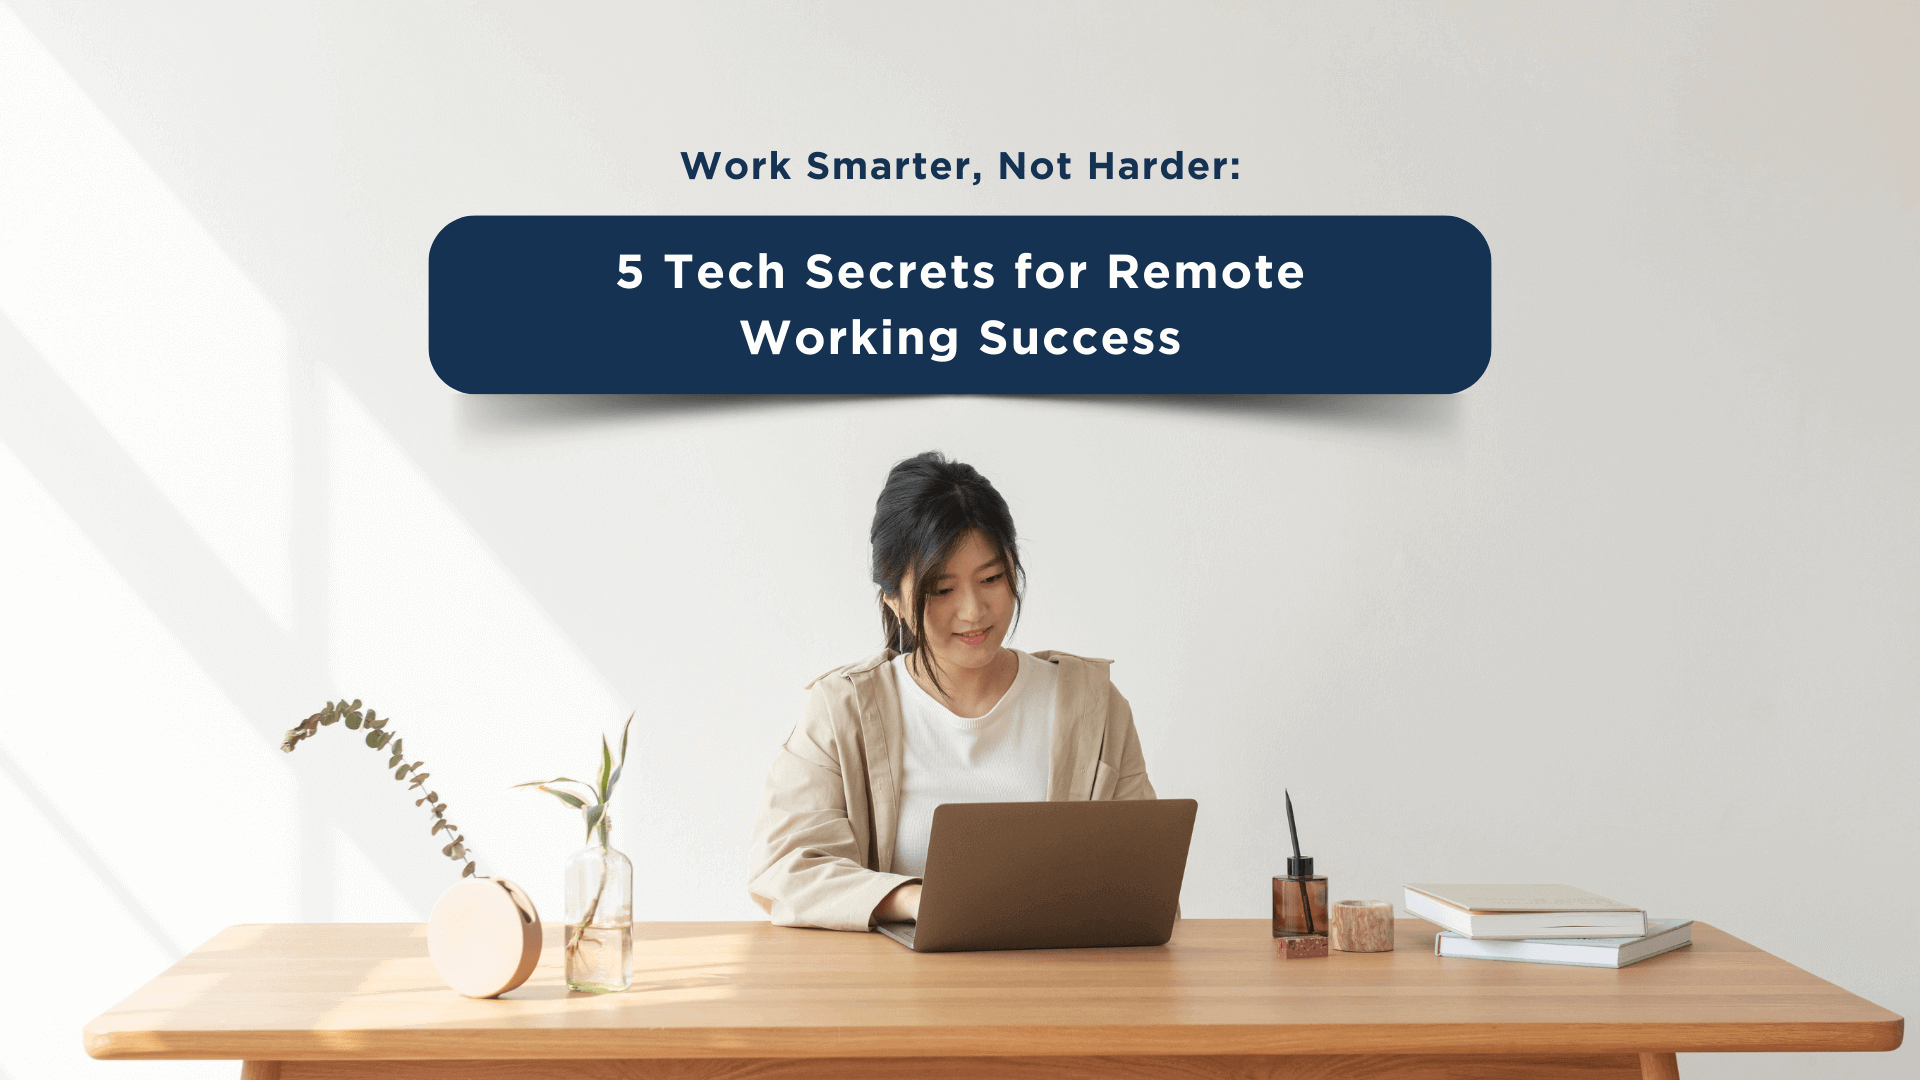 Work Smarter, Not Harder: 5 Tech Secrets for Remote Working Success